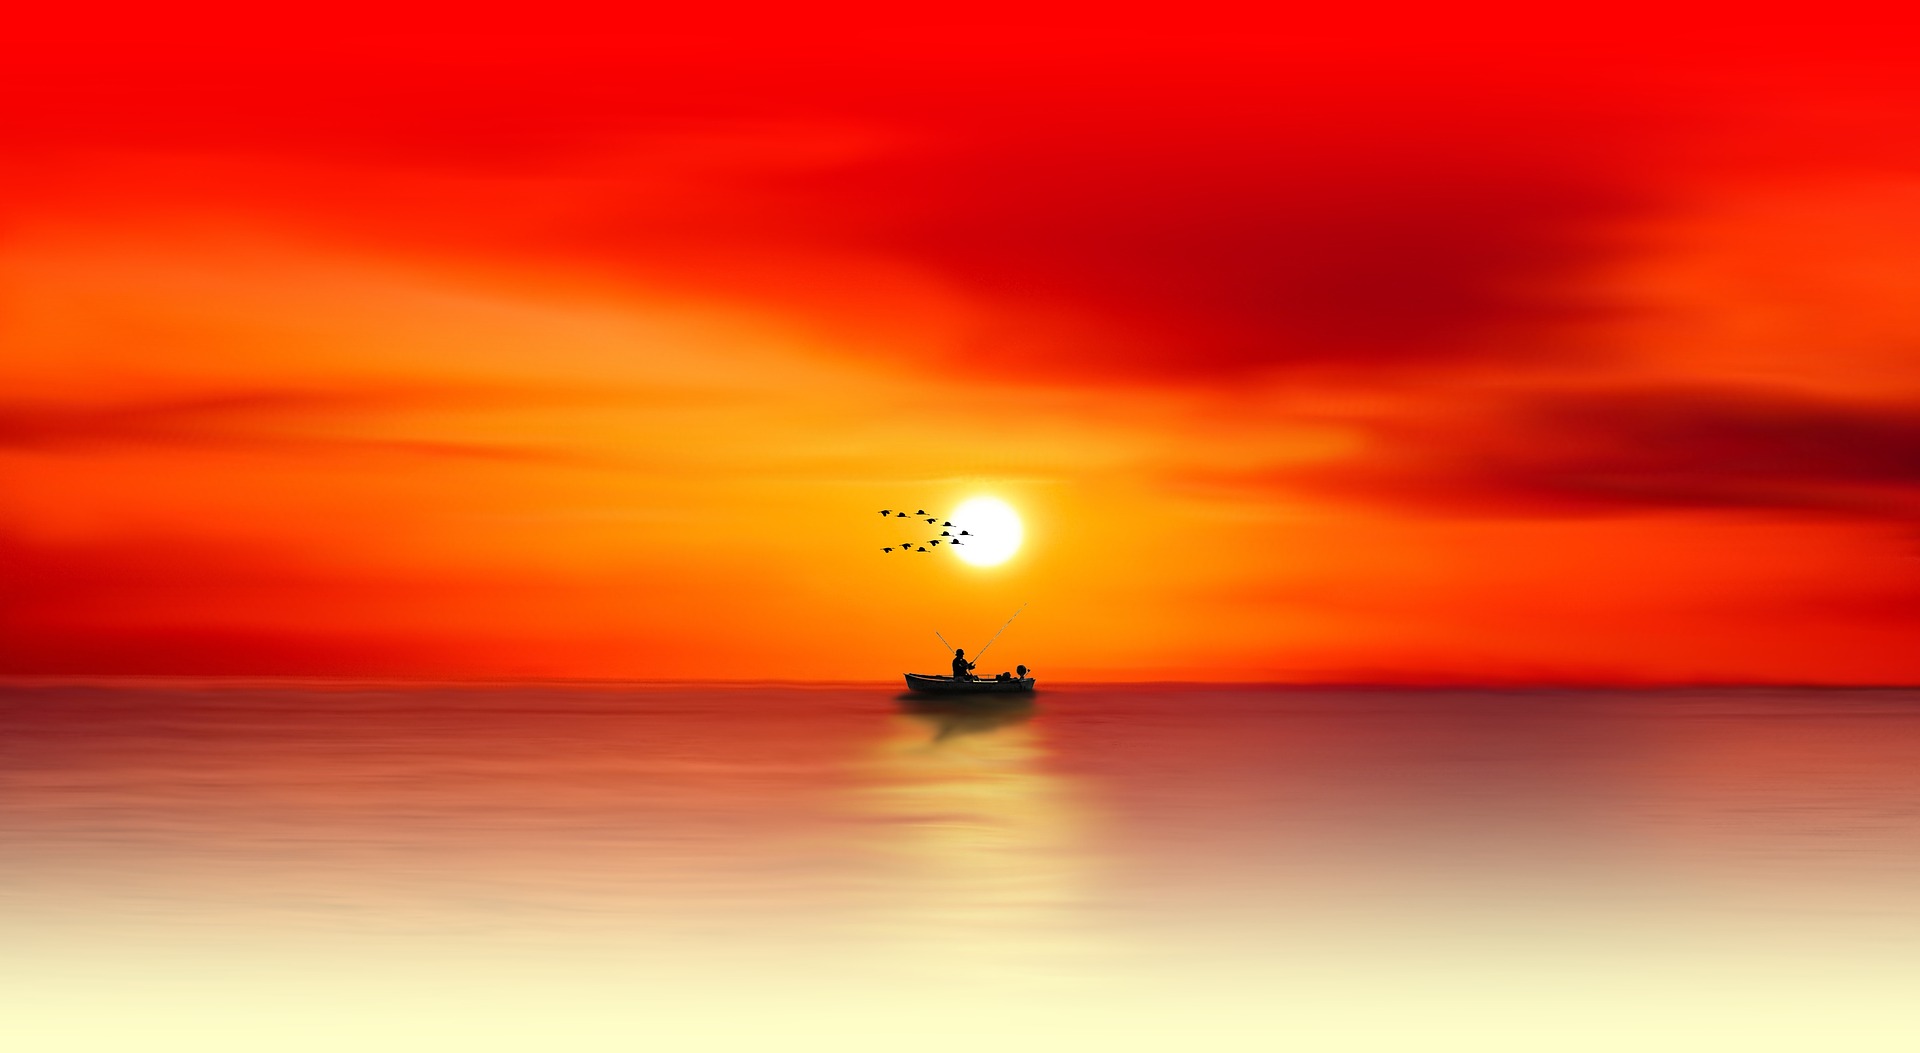 Bild: sunset-3331503_1920 (Quelle: pixabay.com)